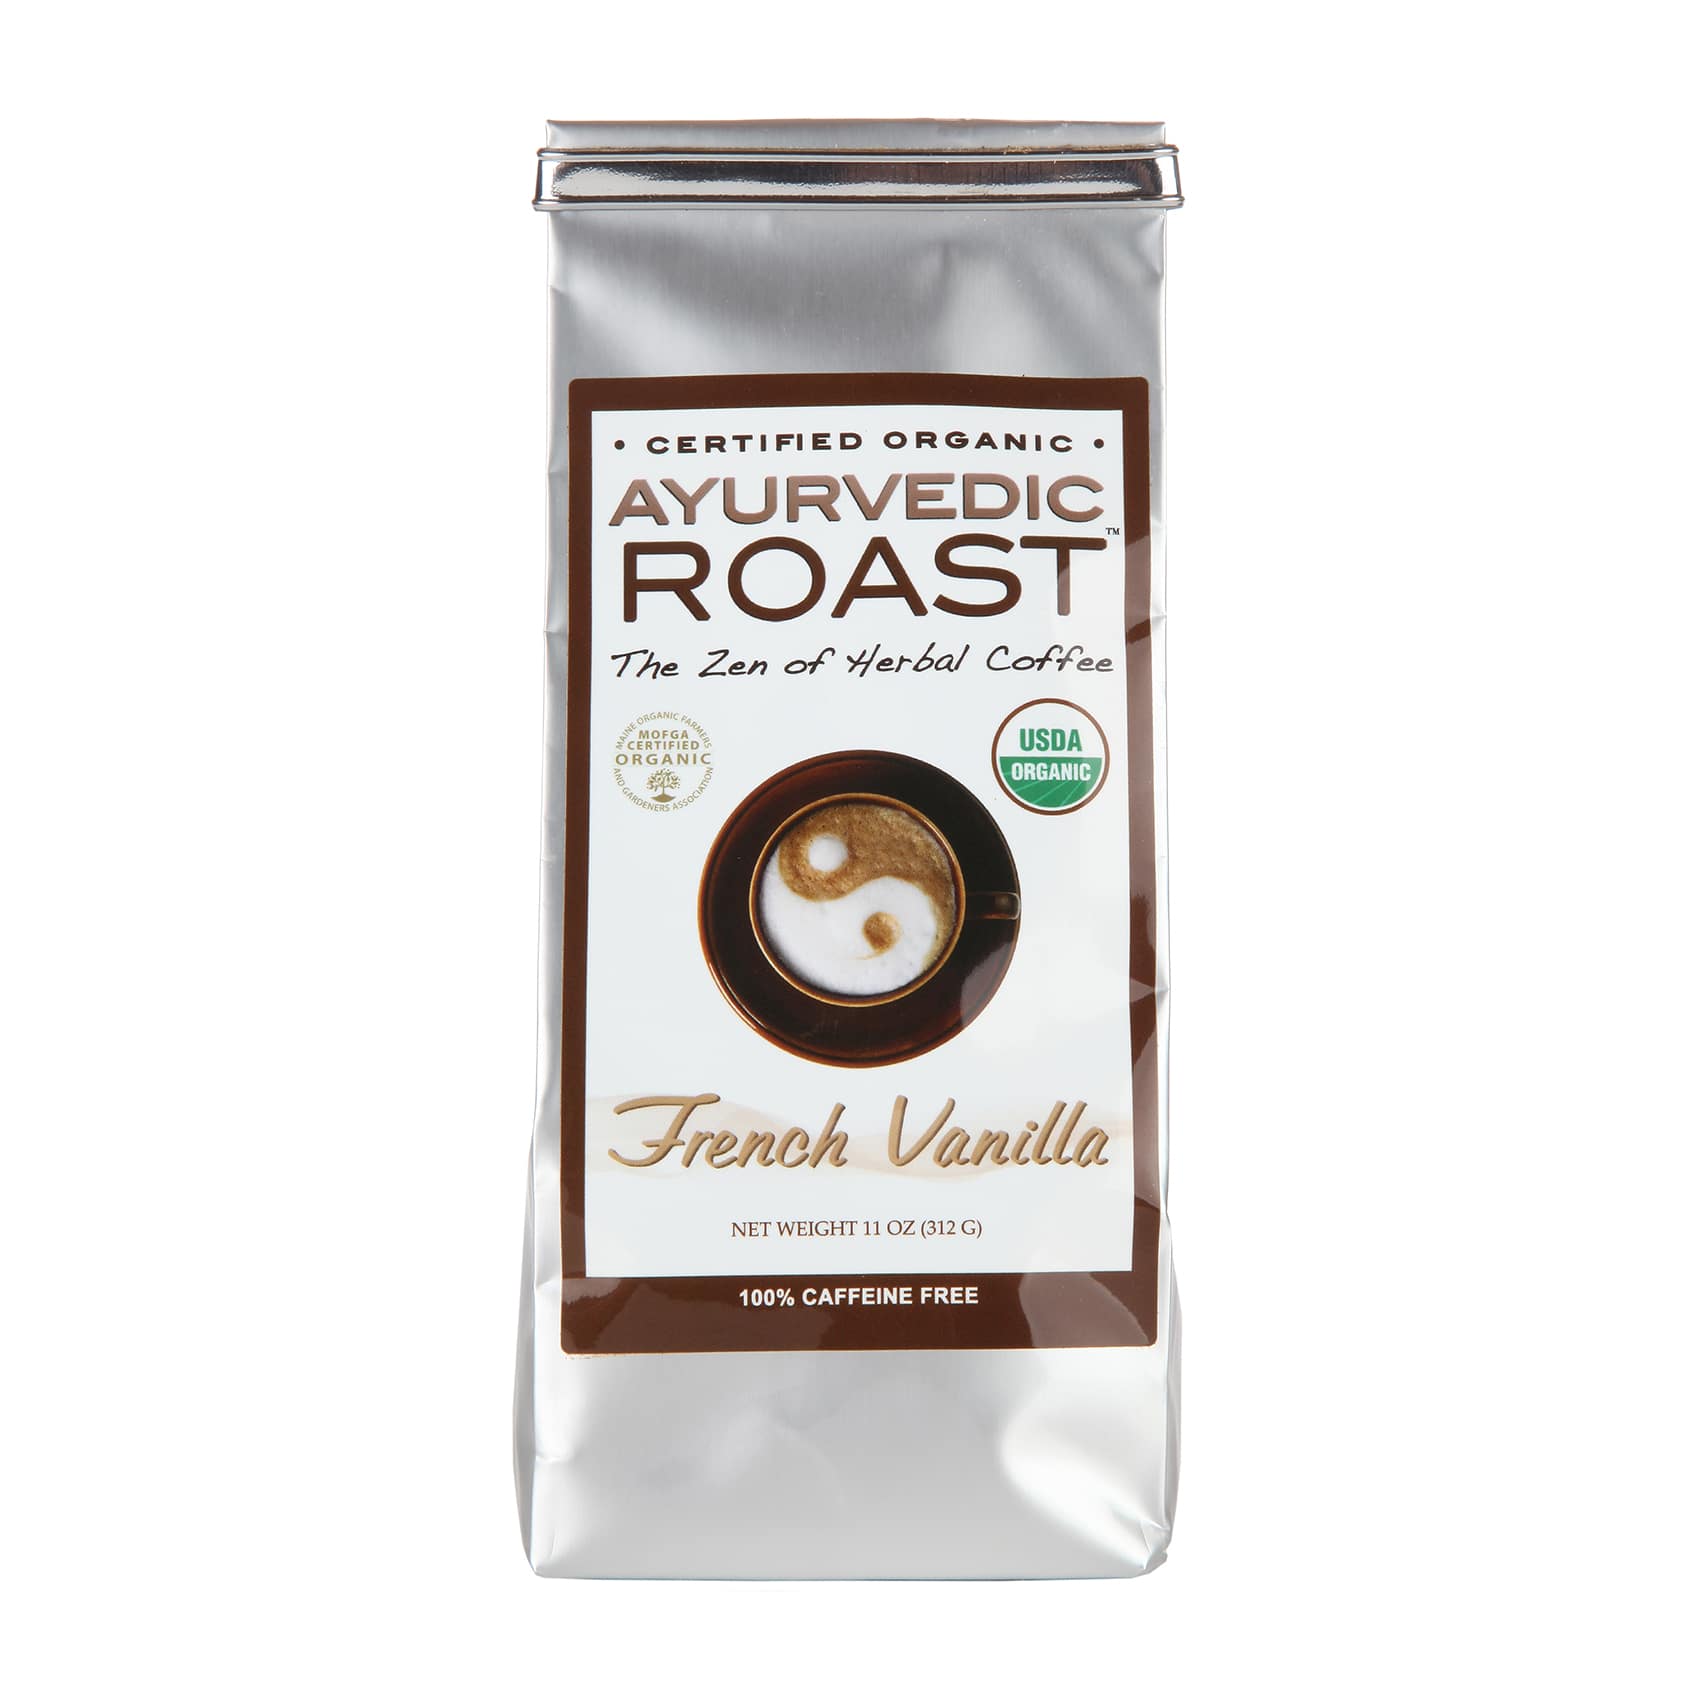 Ayurvedic Roast - Organic Coffee Substitute, Caffeine Free Grain Coffee with Barley Chicory Ashwagandha Brahmi - French Vanilla-0